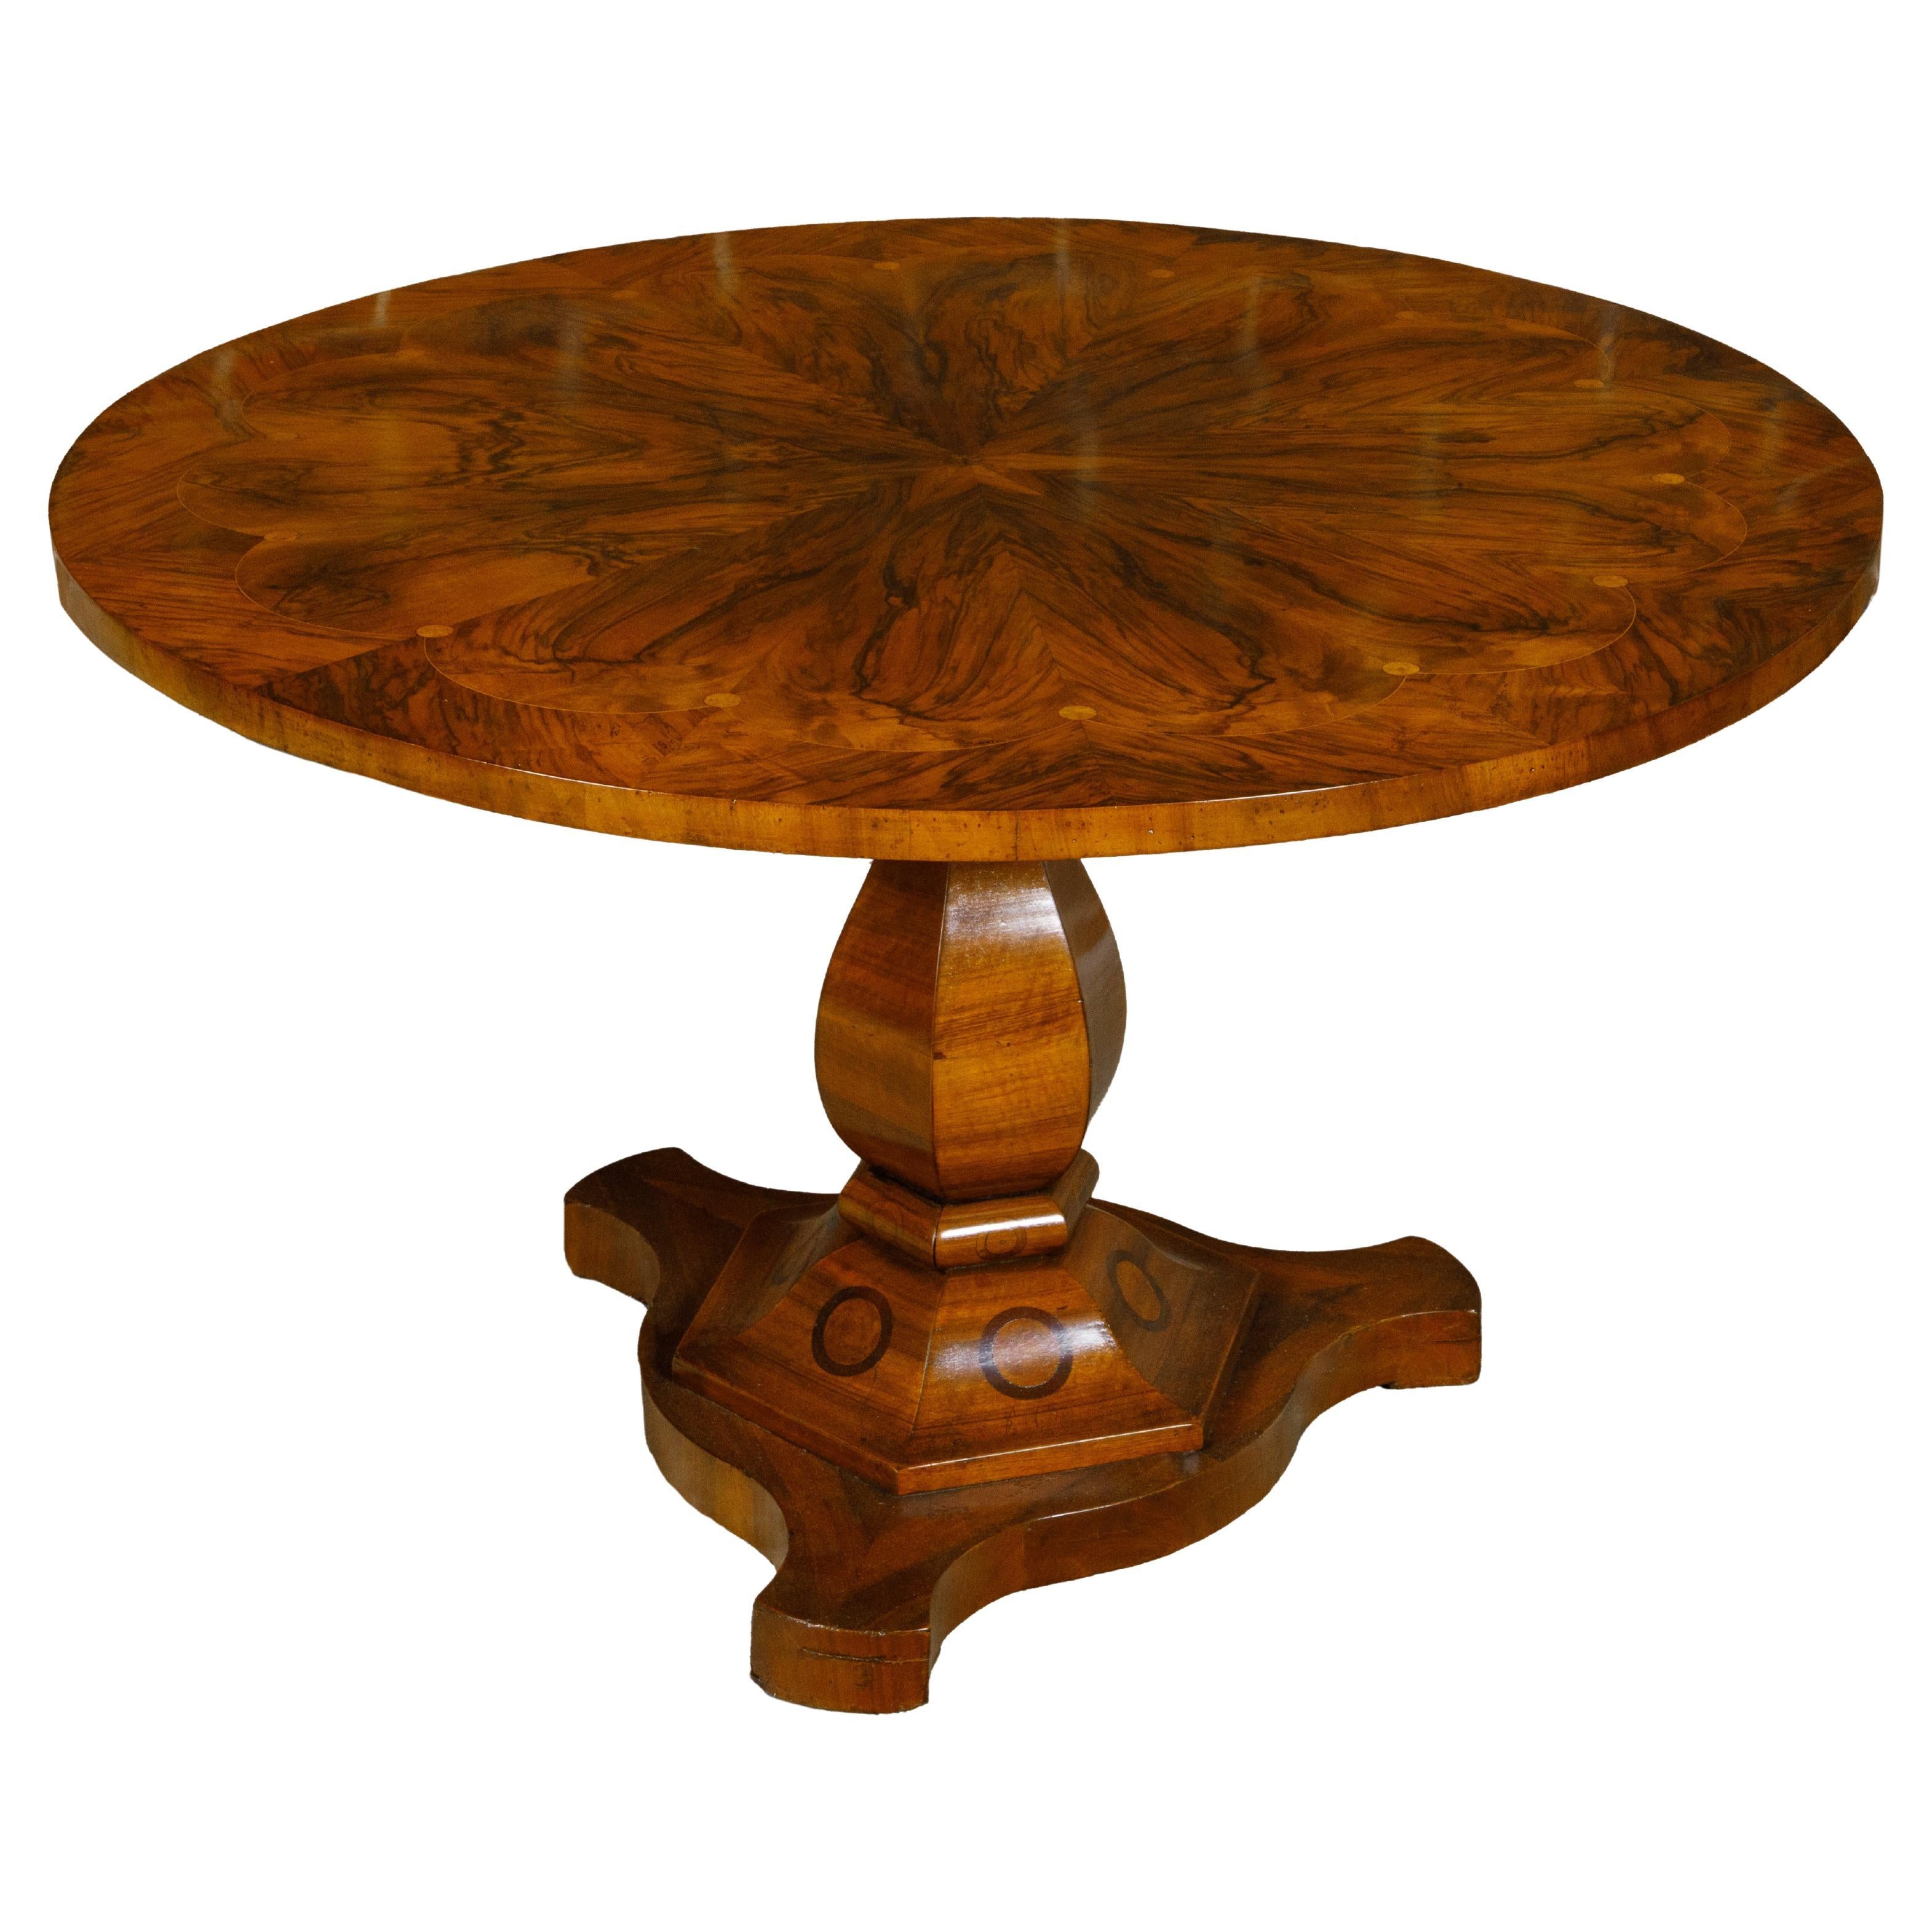 Biedermeier 19th Century Flamed Walnut Pedestal Table with Radiating Motif For Sale